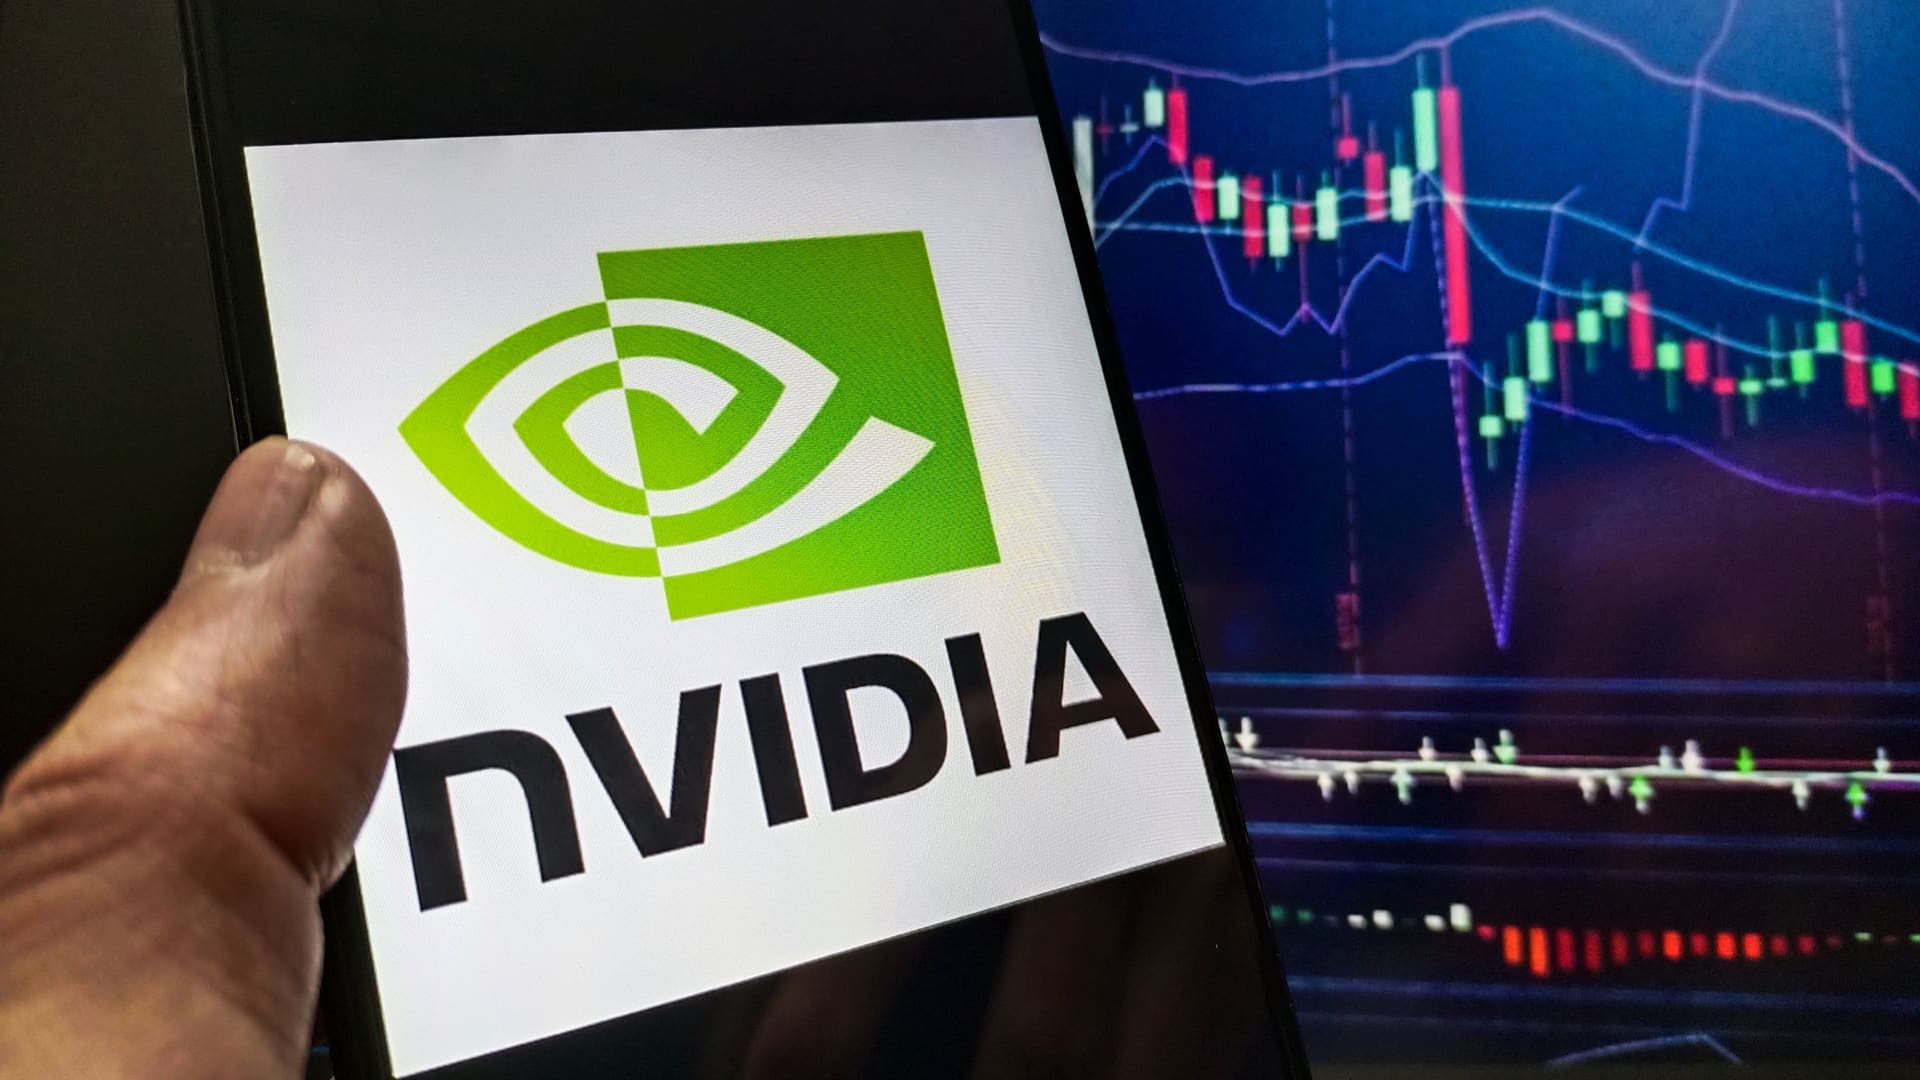 NVDA alternatives: If Nvidia beats estimates, these 6 AI stocks tend to rise